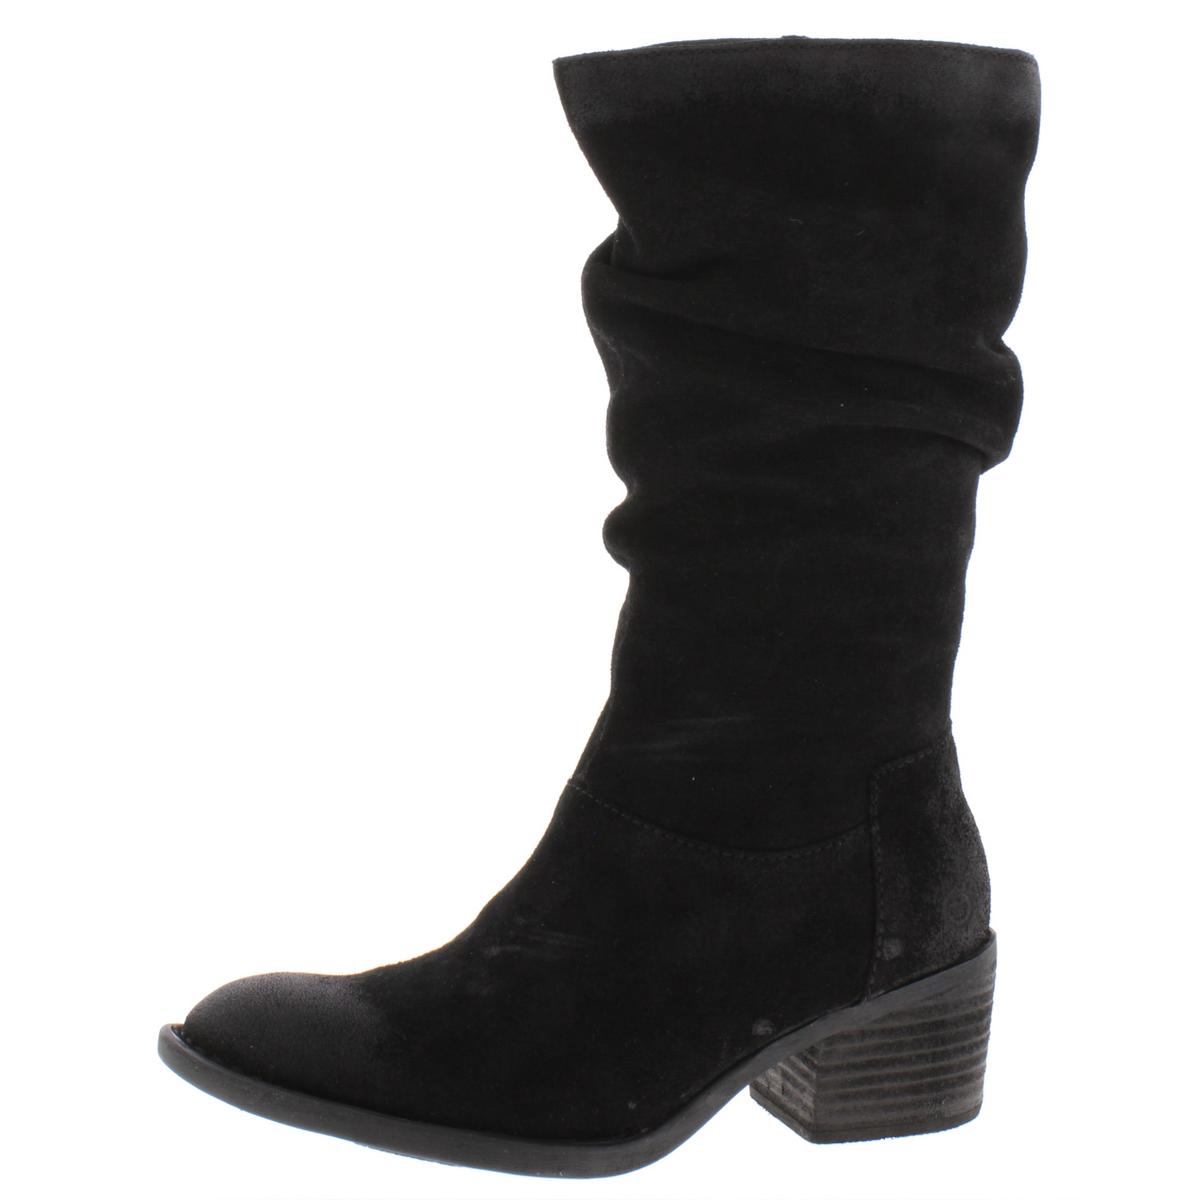 Born Womens Peavy Black Suede Mid-Calf Boots Shoes 6 Medium (B,M) BHFO